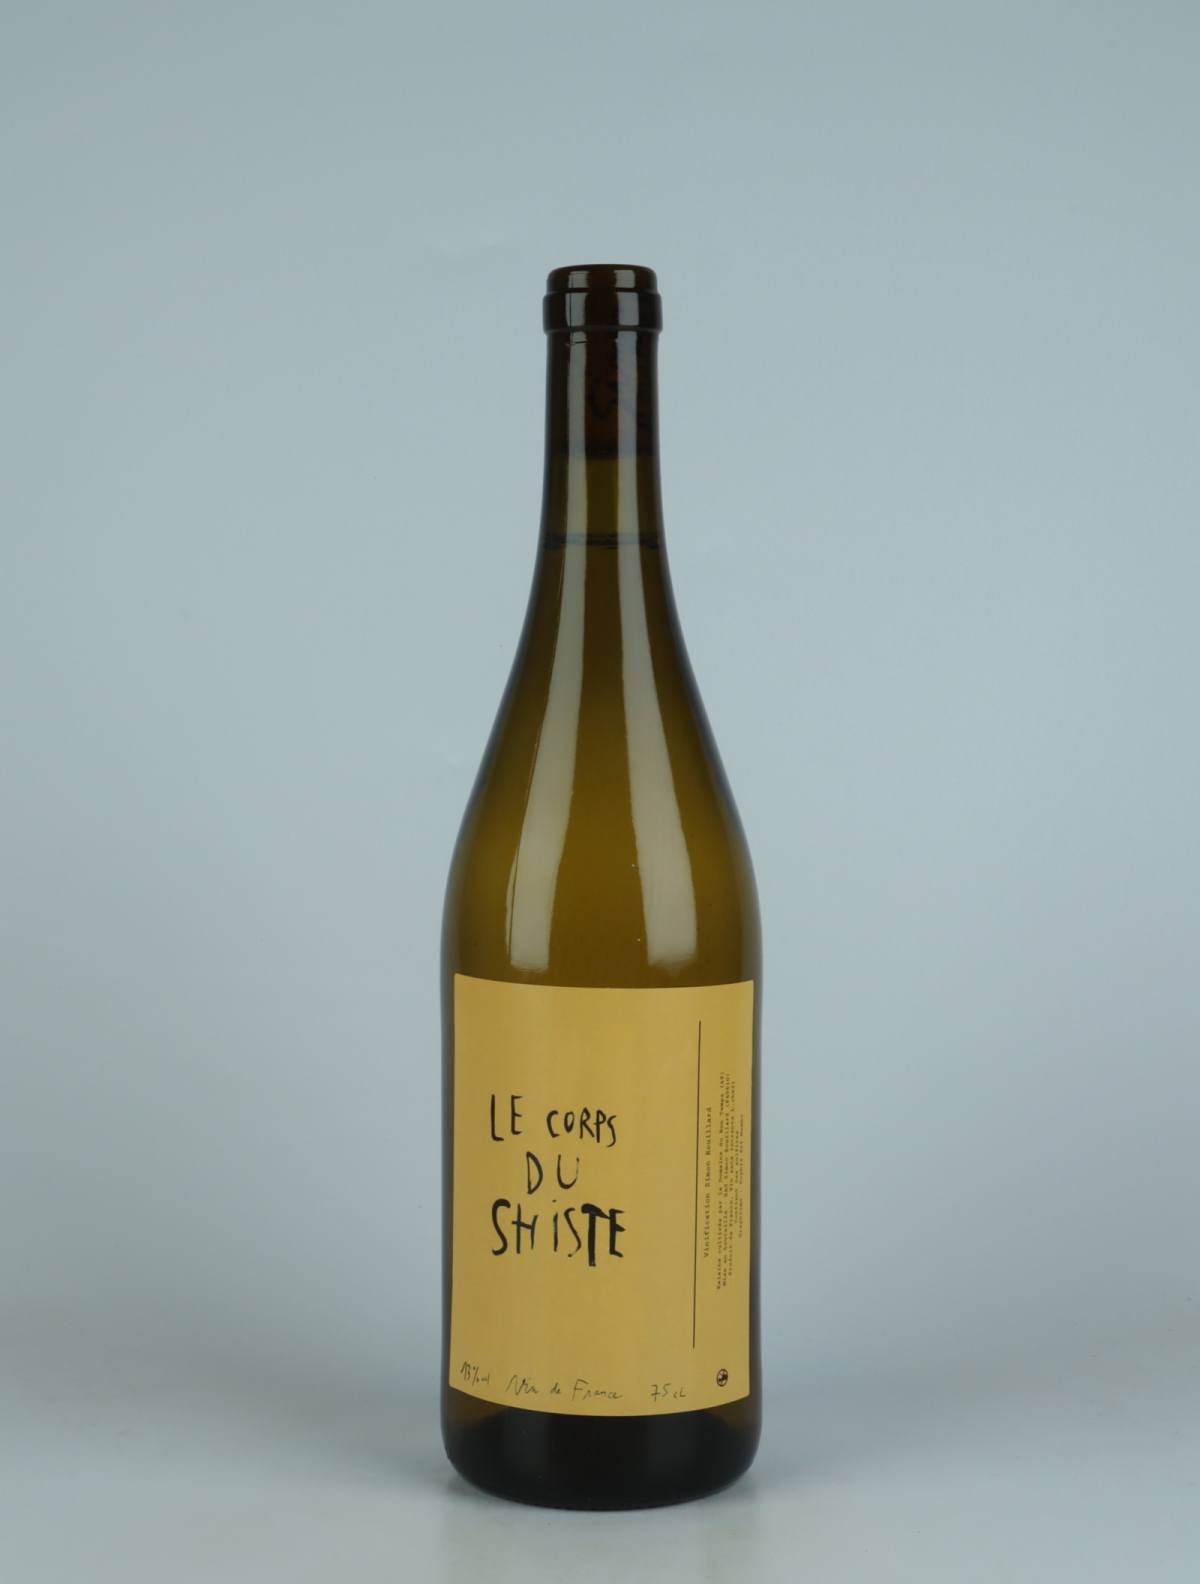 A bottle 2021 Le Corps du Shiste White wine from Simon Rouillard, Loire in France